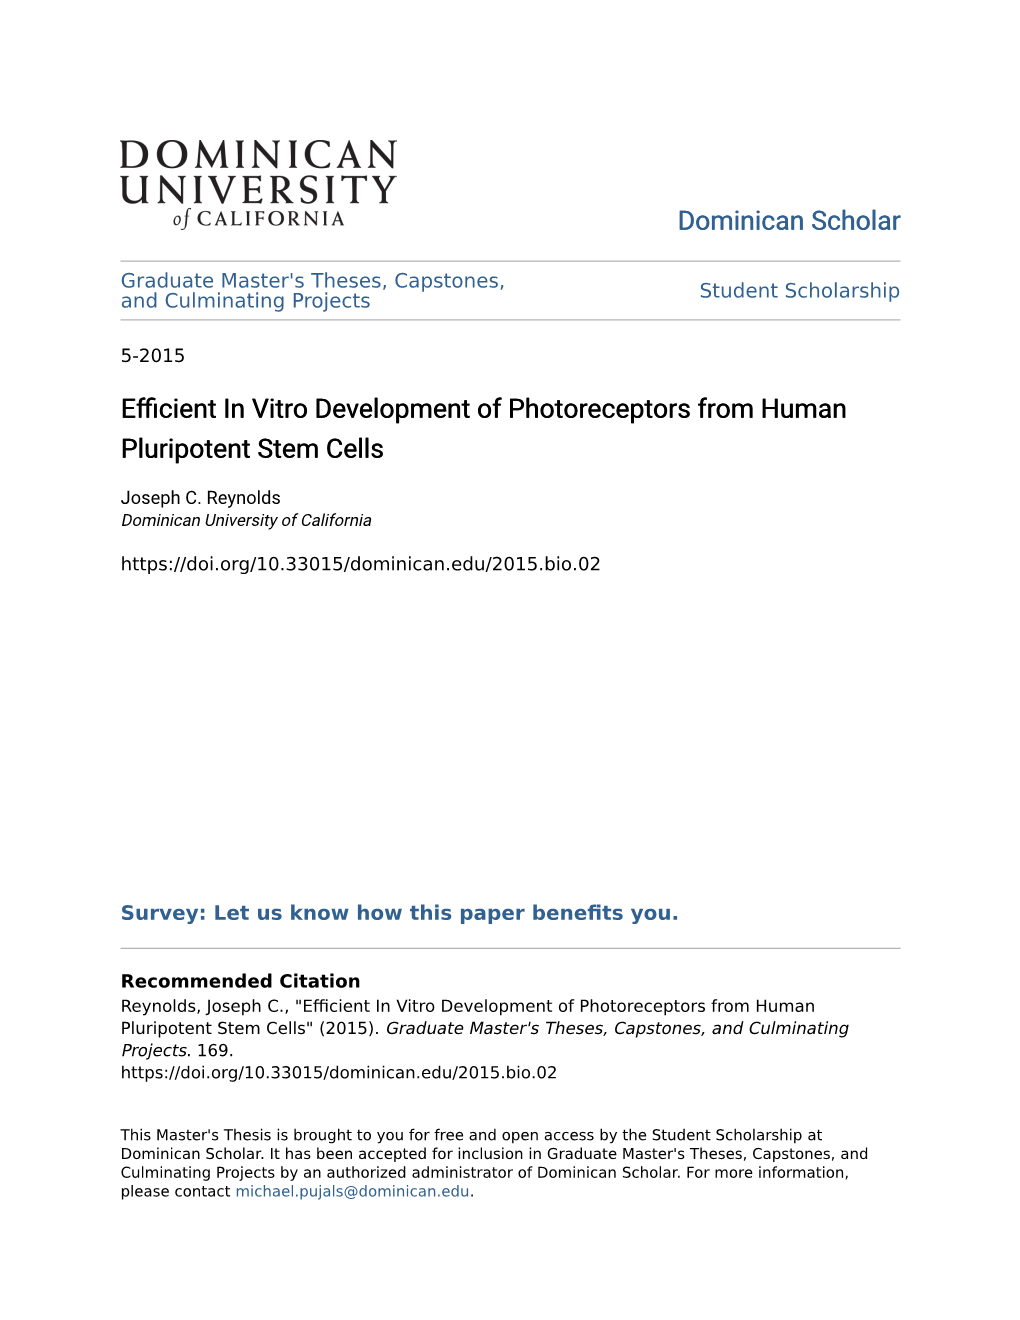 Efficient in Vitro Development of Photoreceptors from Human Pluripotent Stem Cells